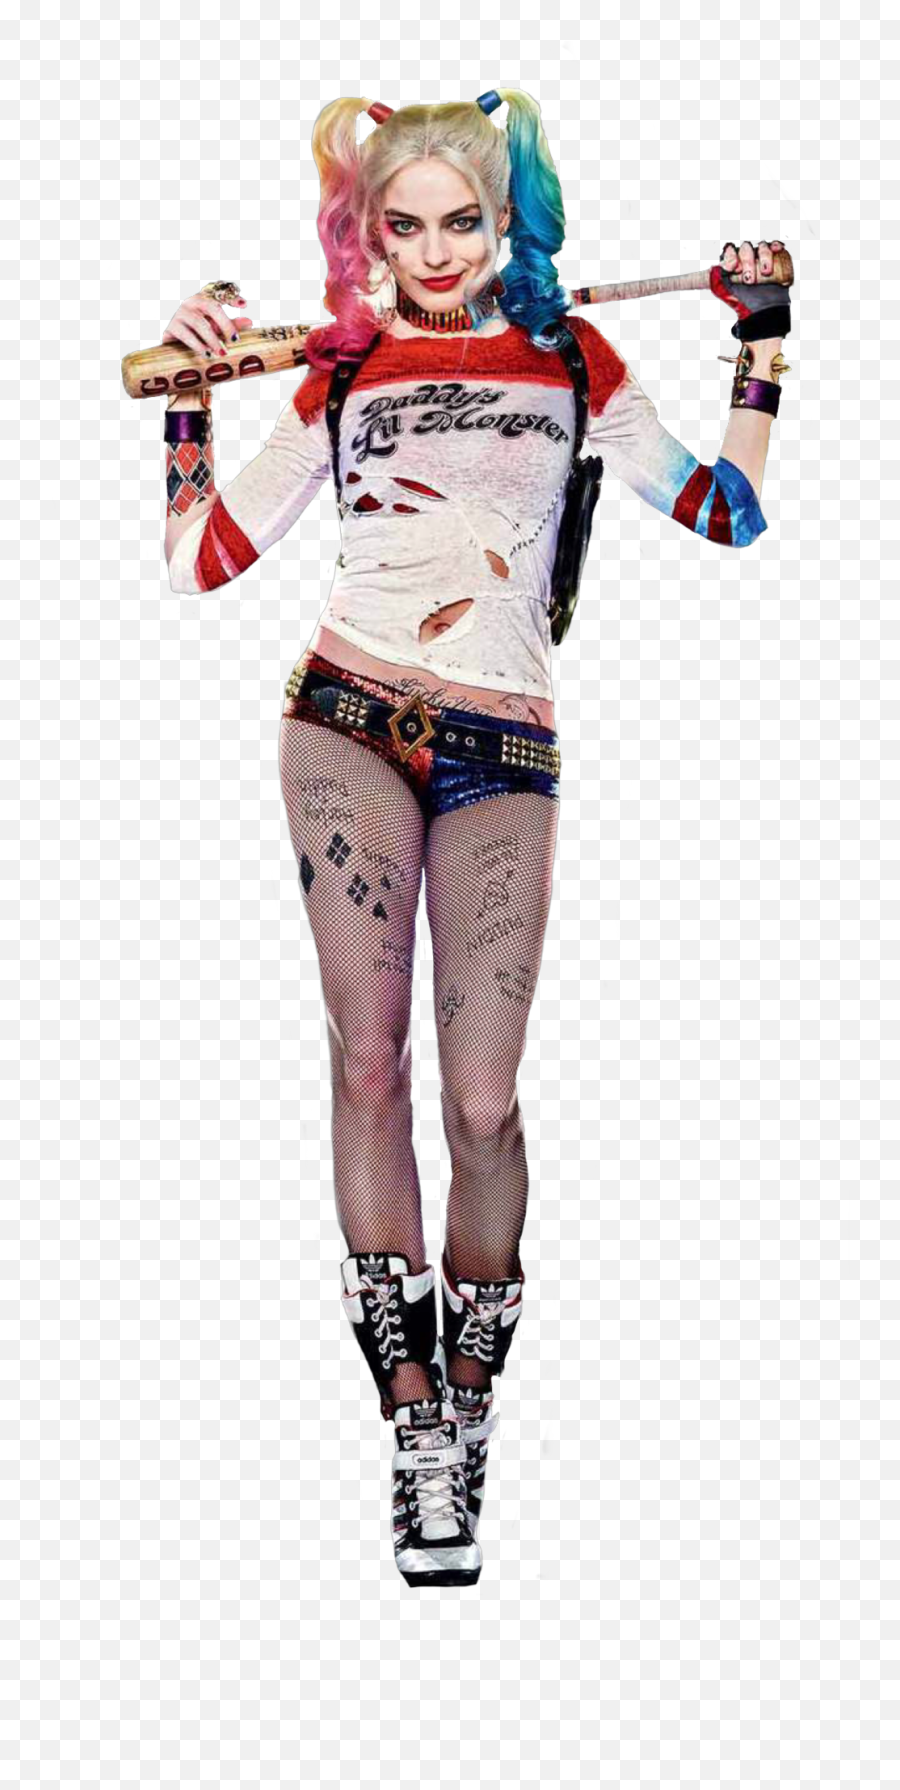 Download Harley Quinn Suicide Squad Png Image For Free - Margot Robbie Harley Quinn,Suicide Squad Logo